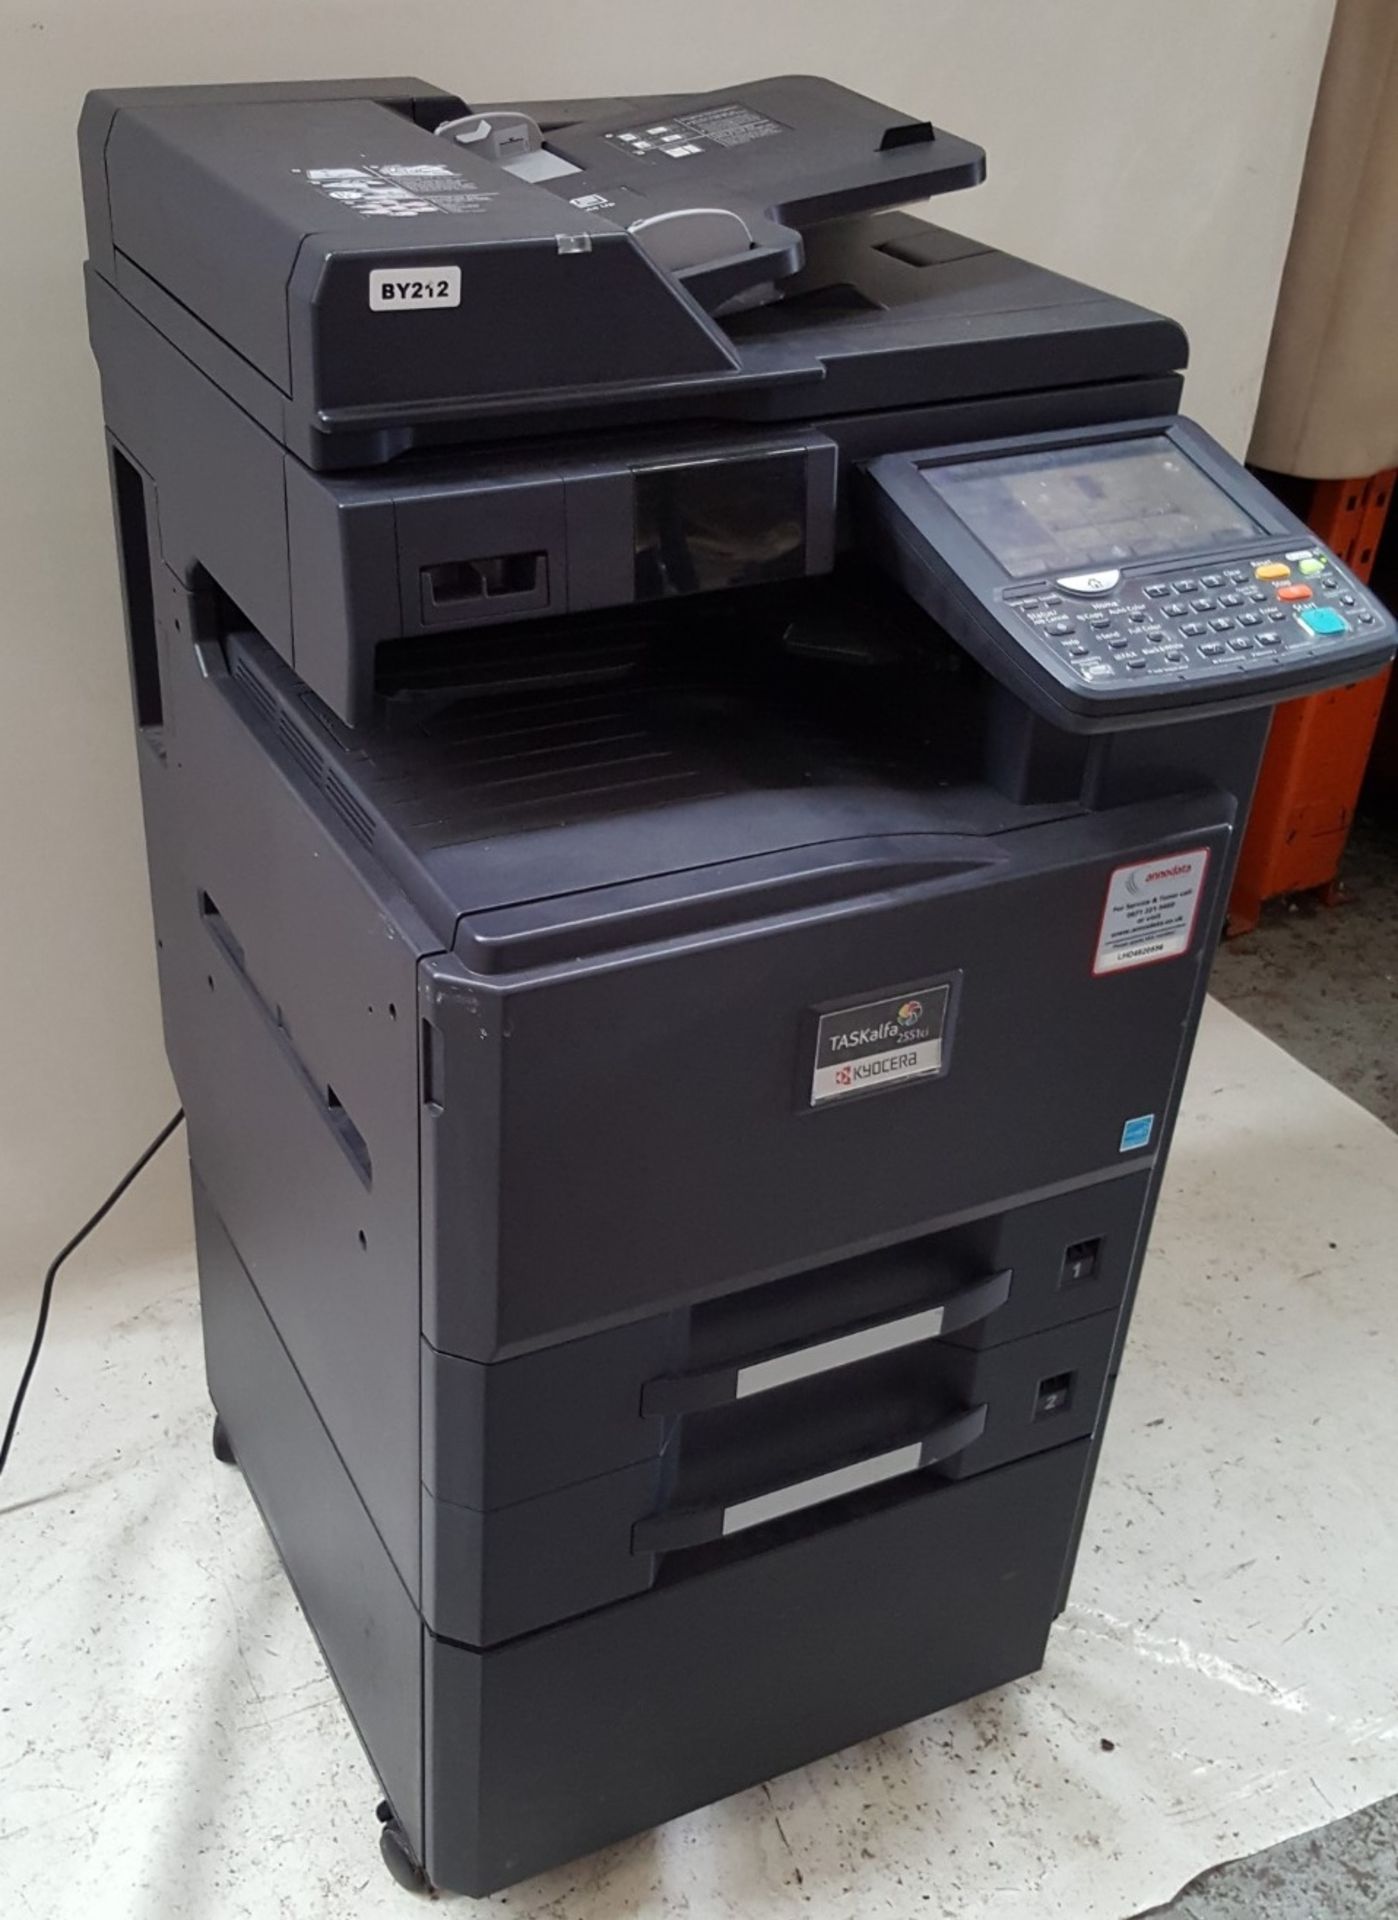 1 x KYOCERA TASKALFA 2551ci Multifunction Office Printer - Ref BY212 - Image 2 of 5